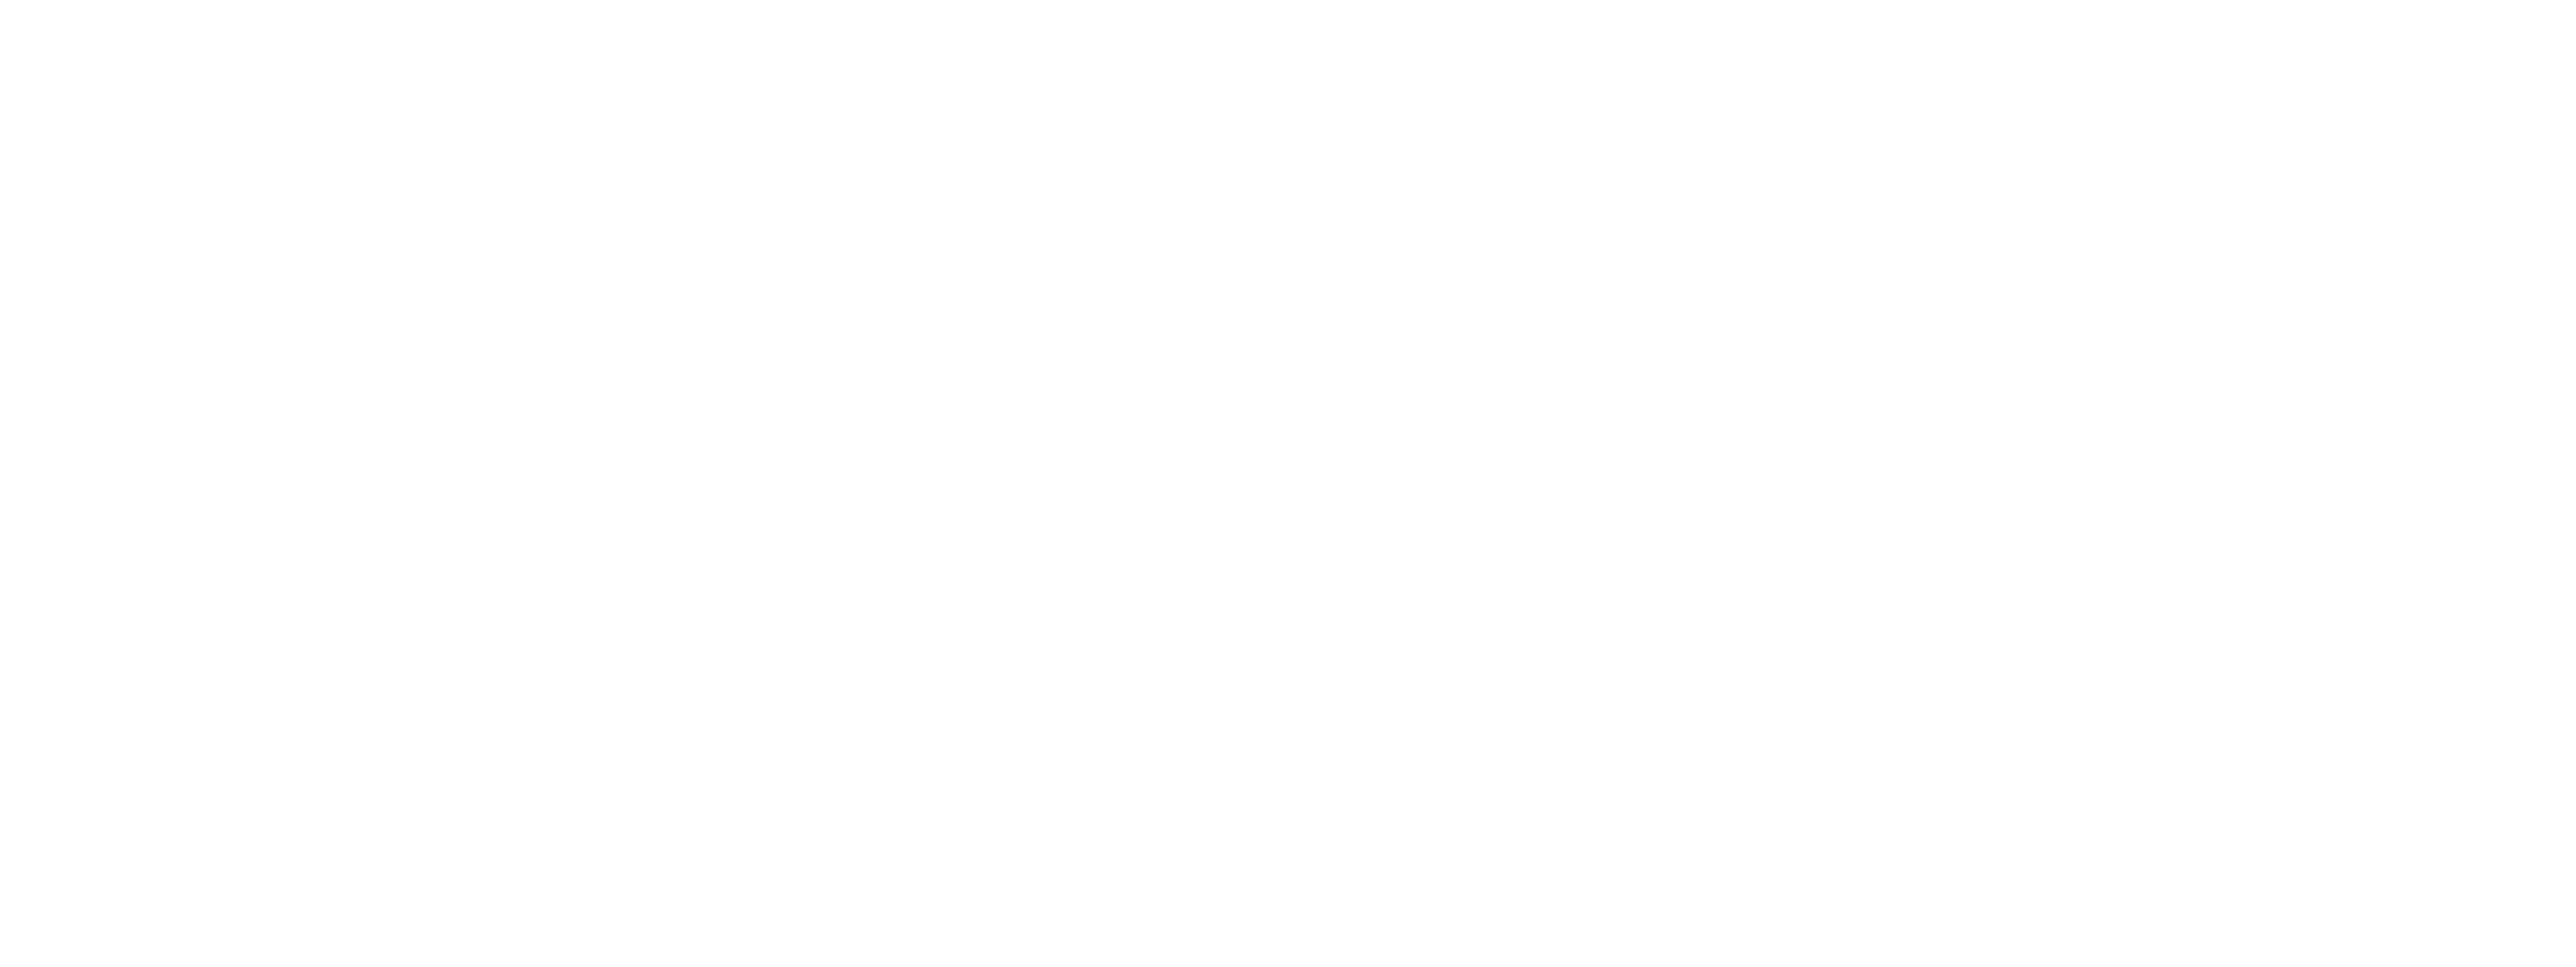 Wagga Wagga Markeplace